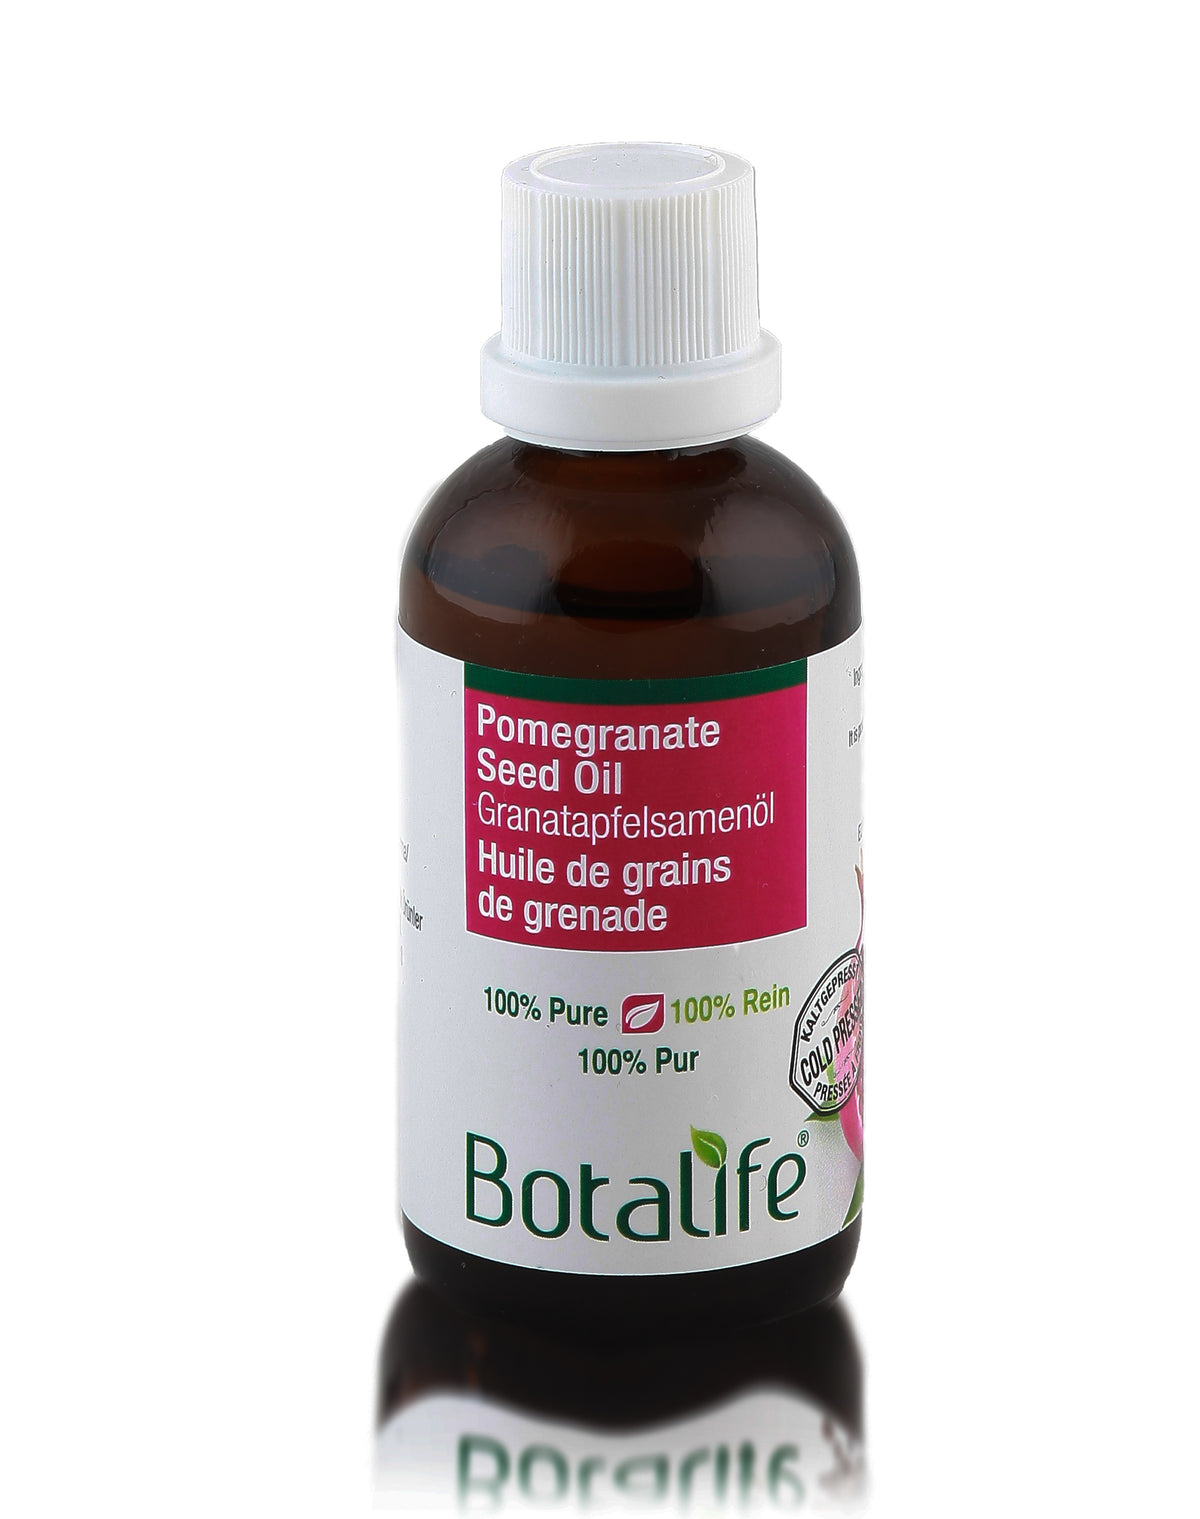 Botalife Pomegranate Seed Oil